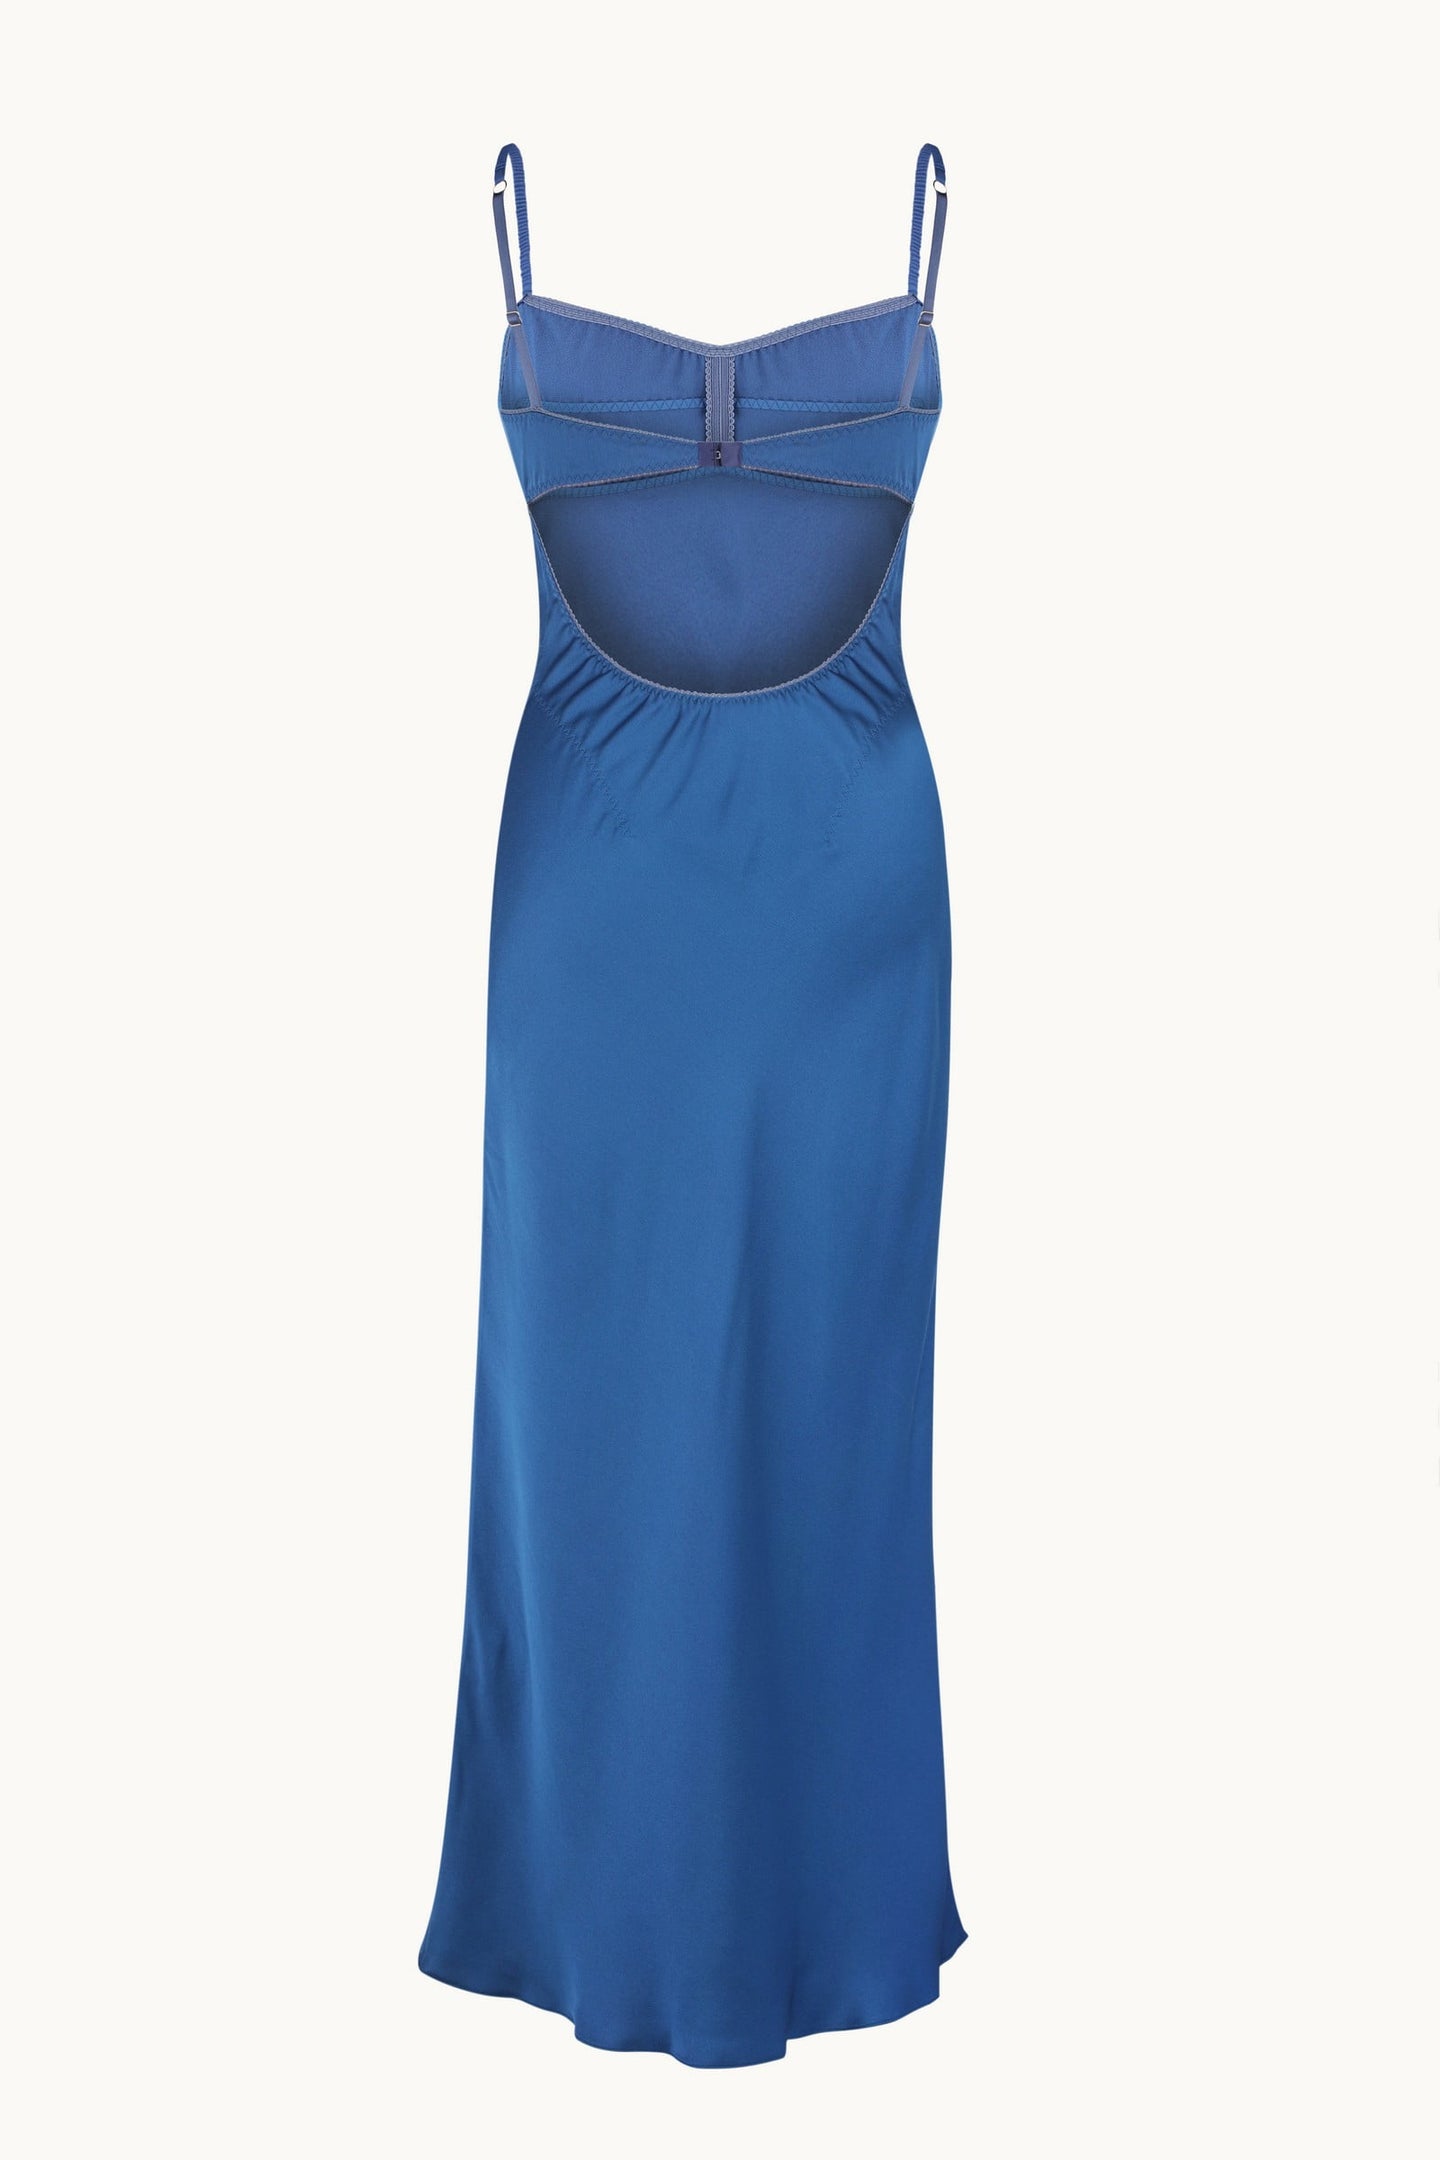 Waterlily blue dress back view